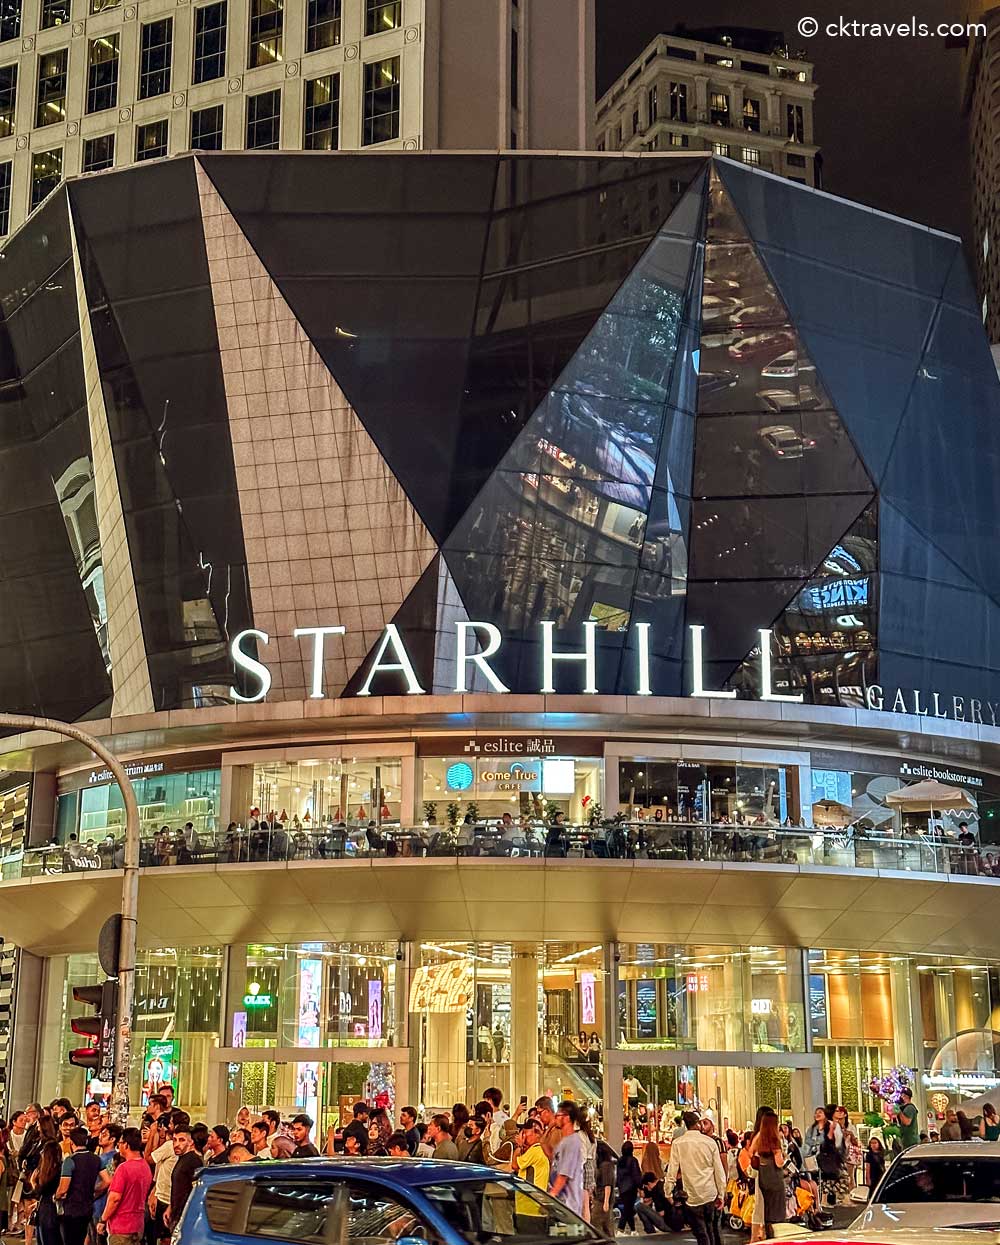 The Starhill Mall Kuala Lumpur malls